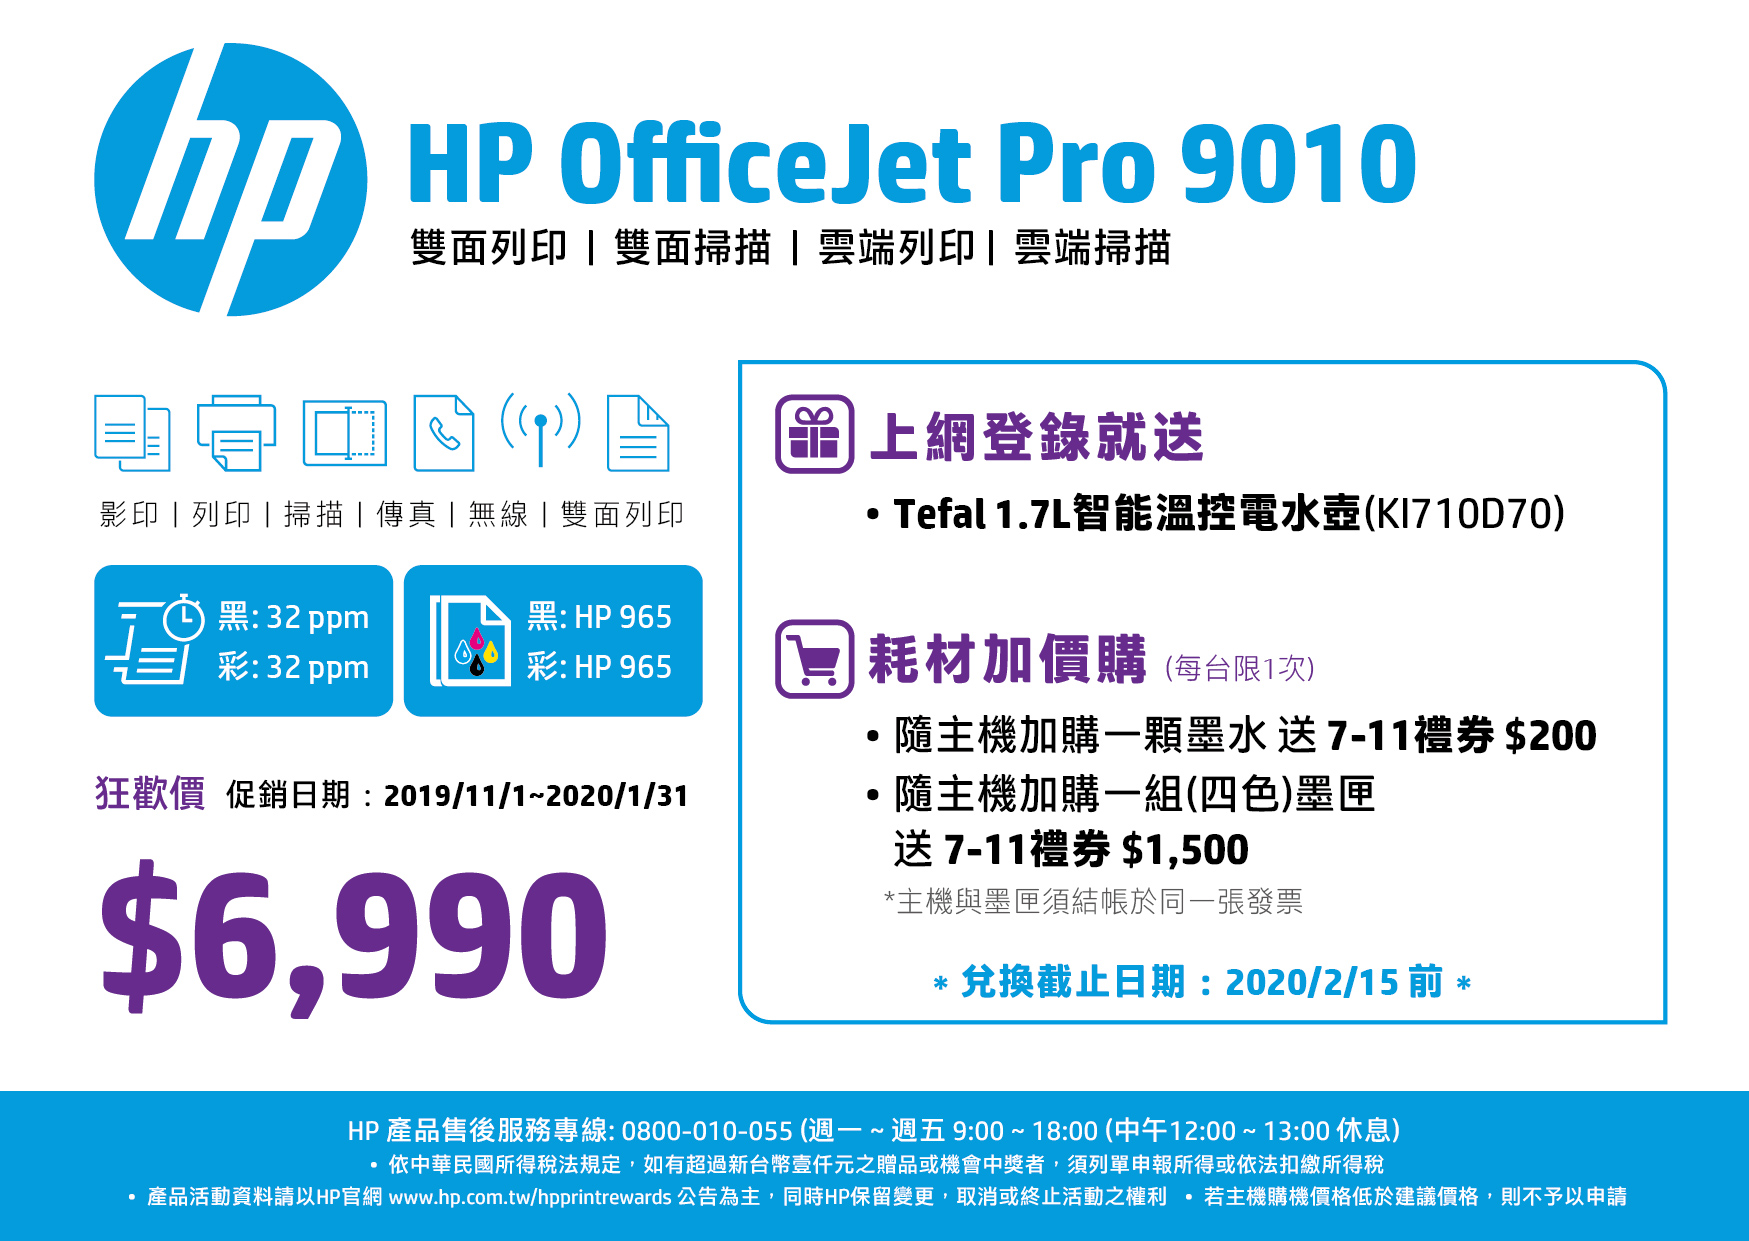 HP OfficeJet Pro 9010 多功能事務印表機(1KR53D)